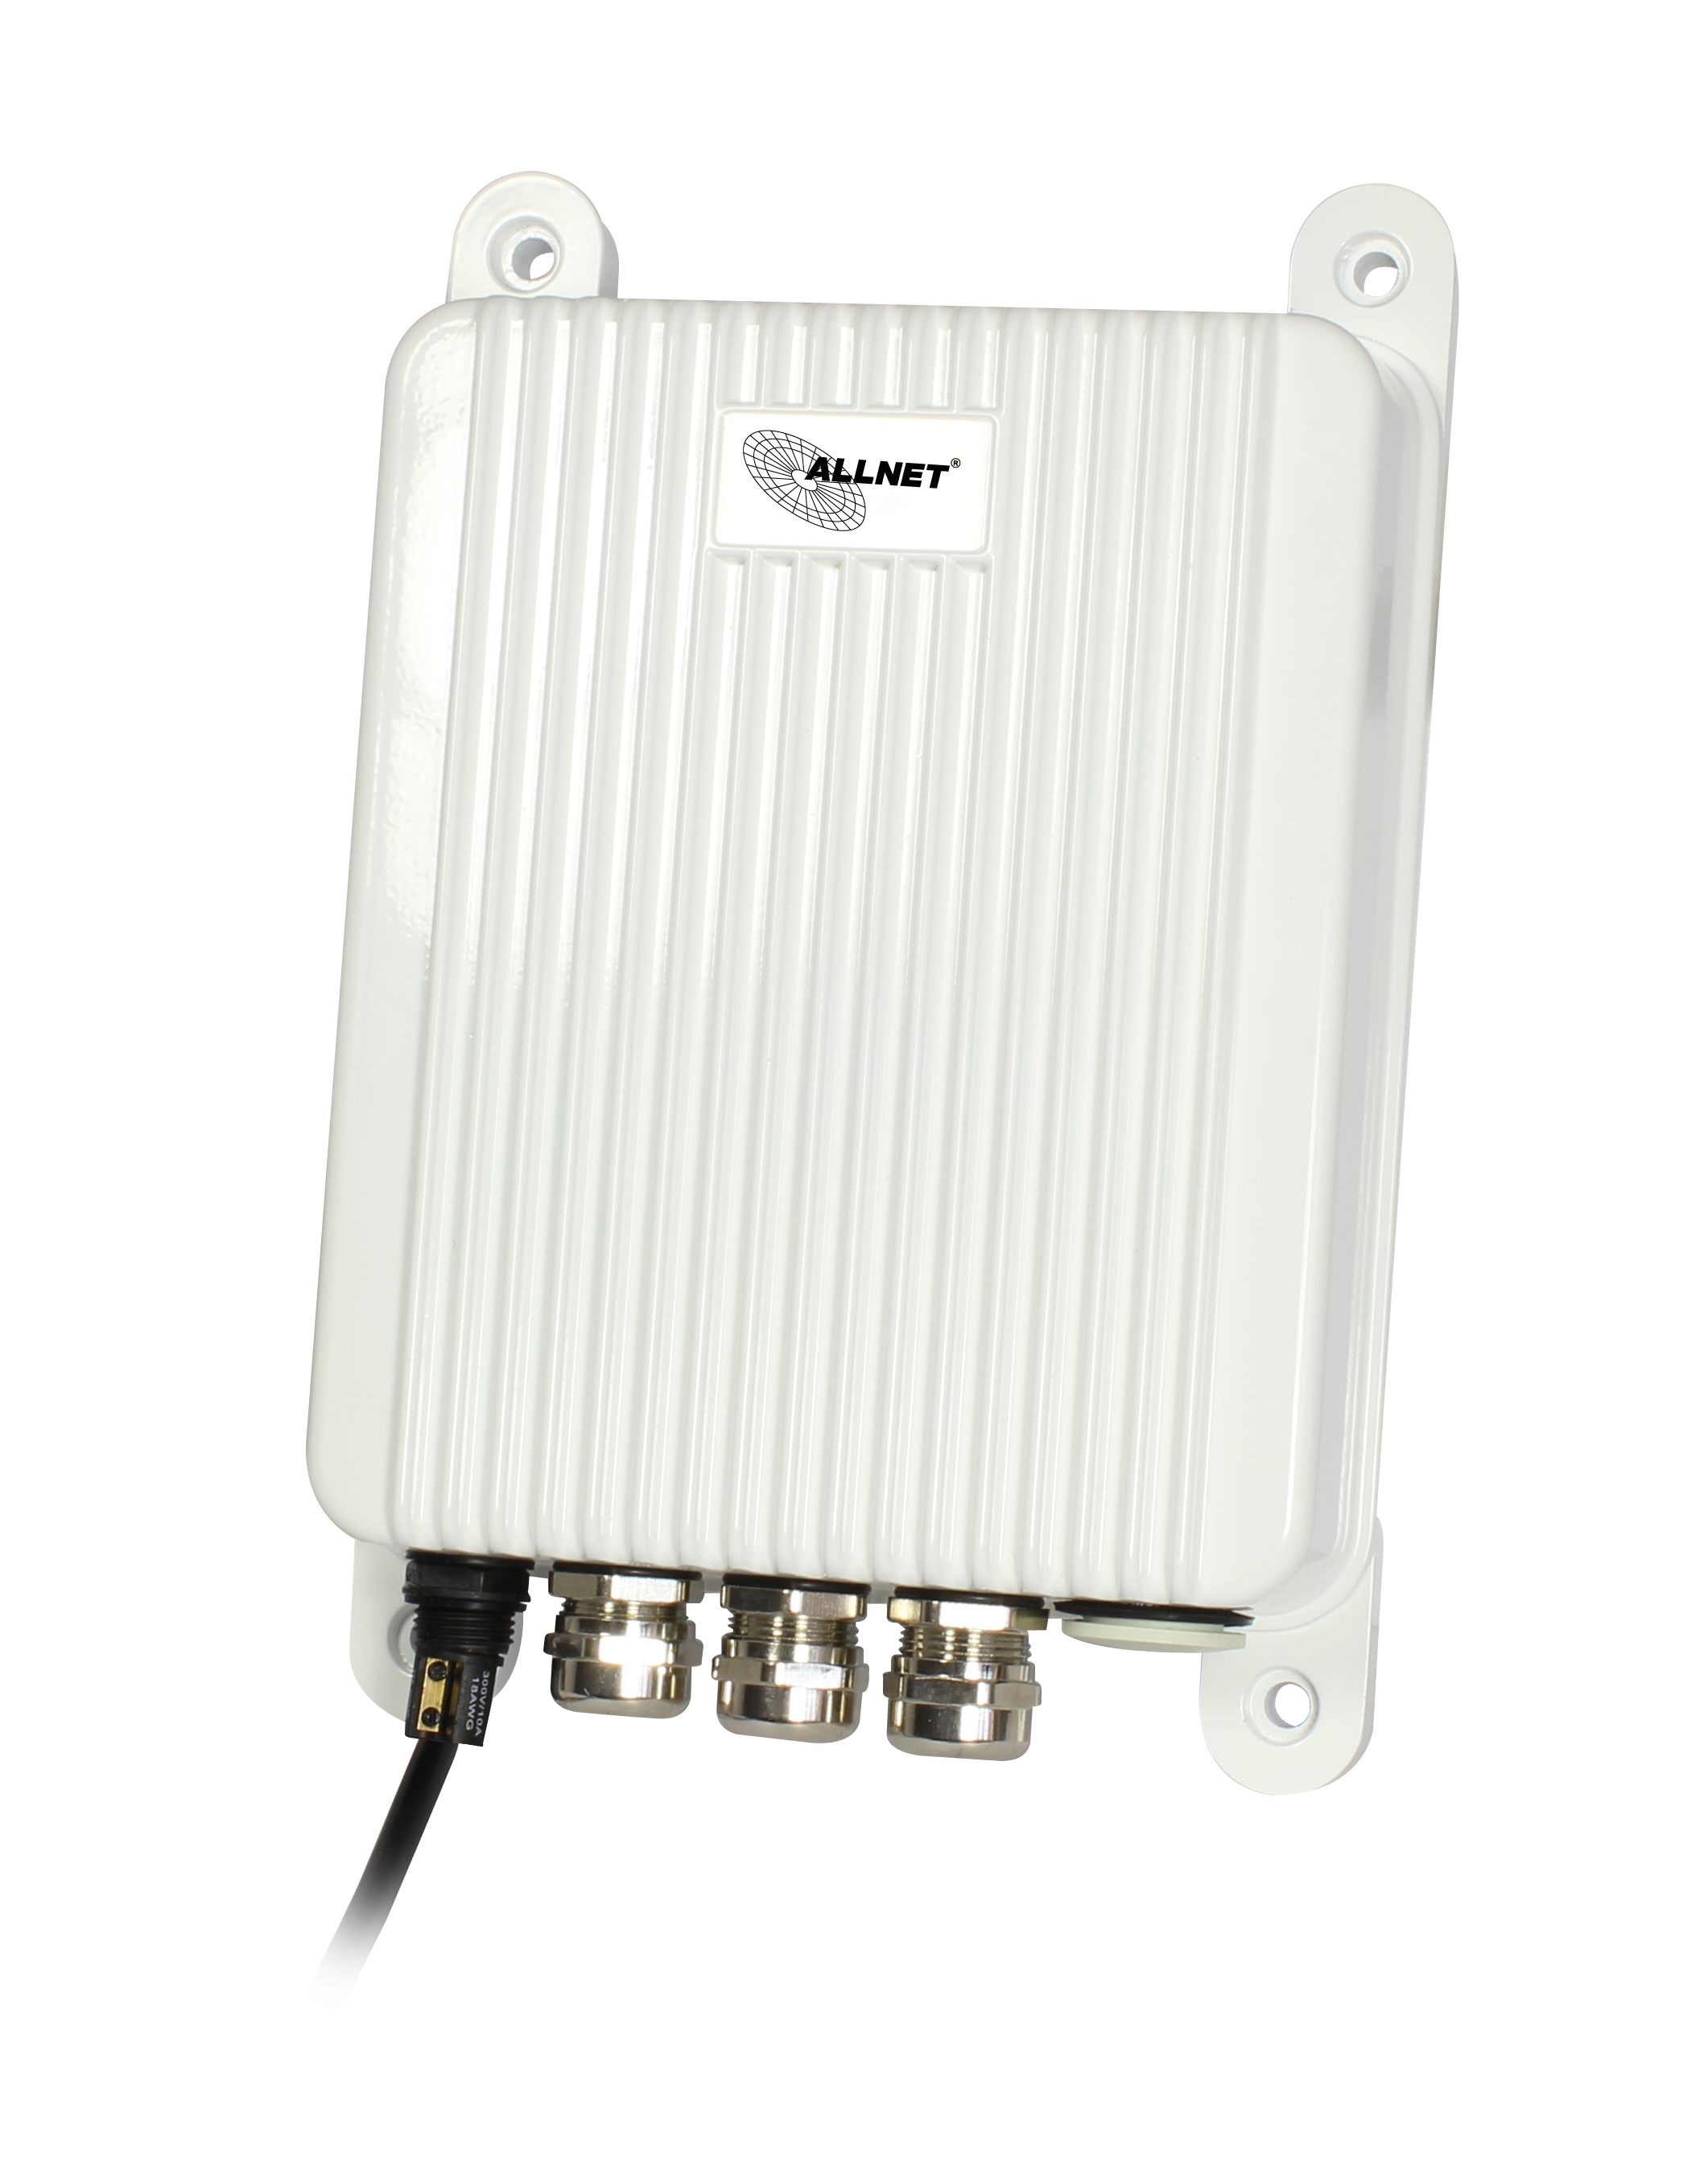 ALLNET Switch unmanaged outdoor 3 Port Gigabit 100W / 3x PoE+ / 1x SFP / Fanless / IP67 / \"ALL-SGO8103P\"